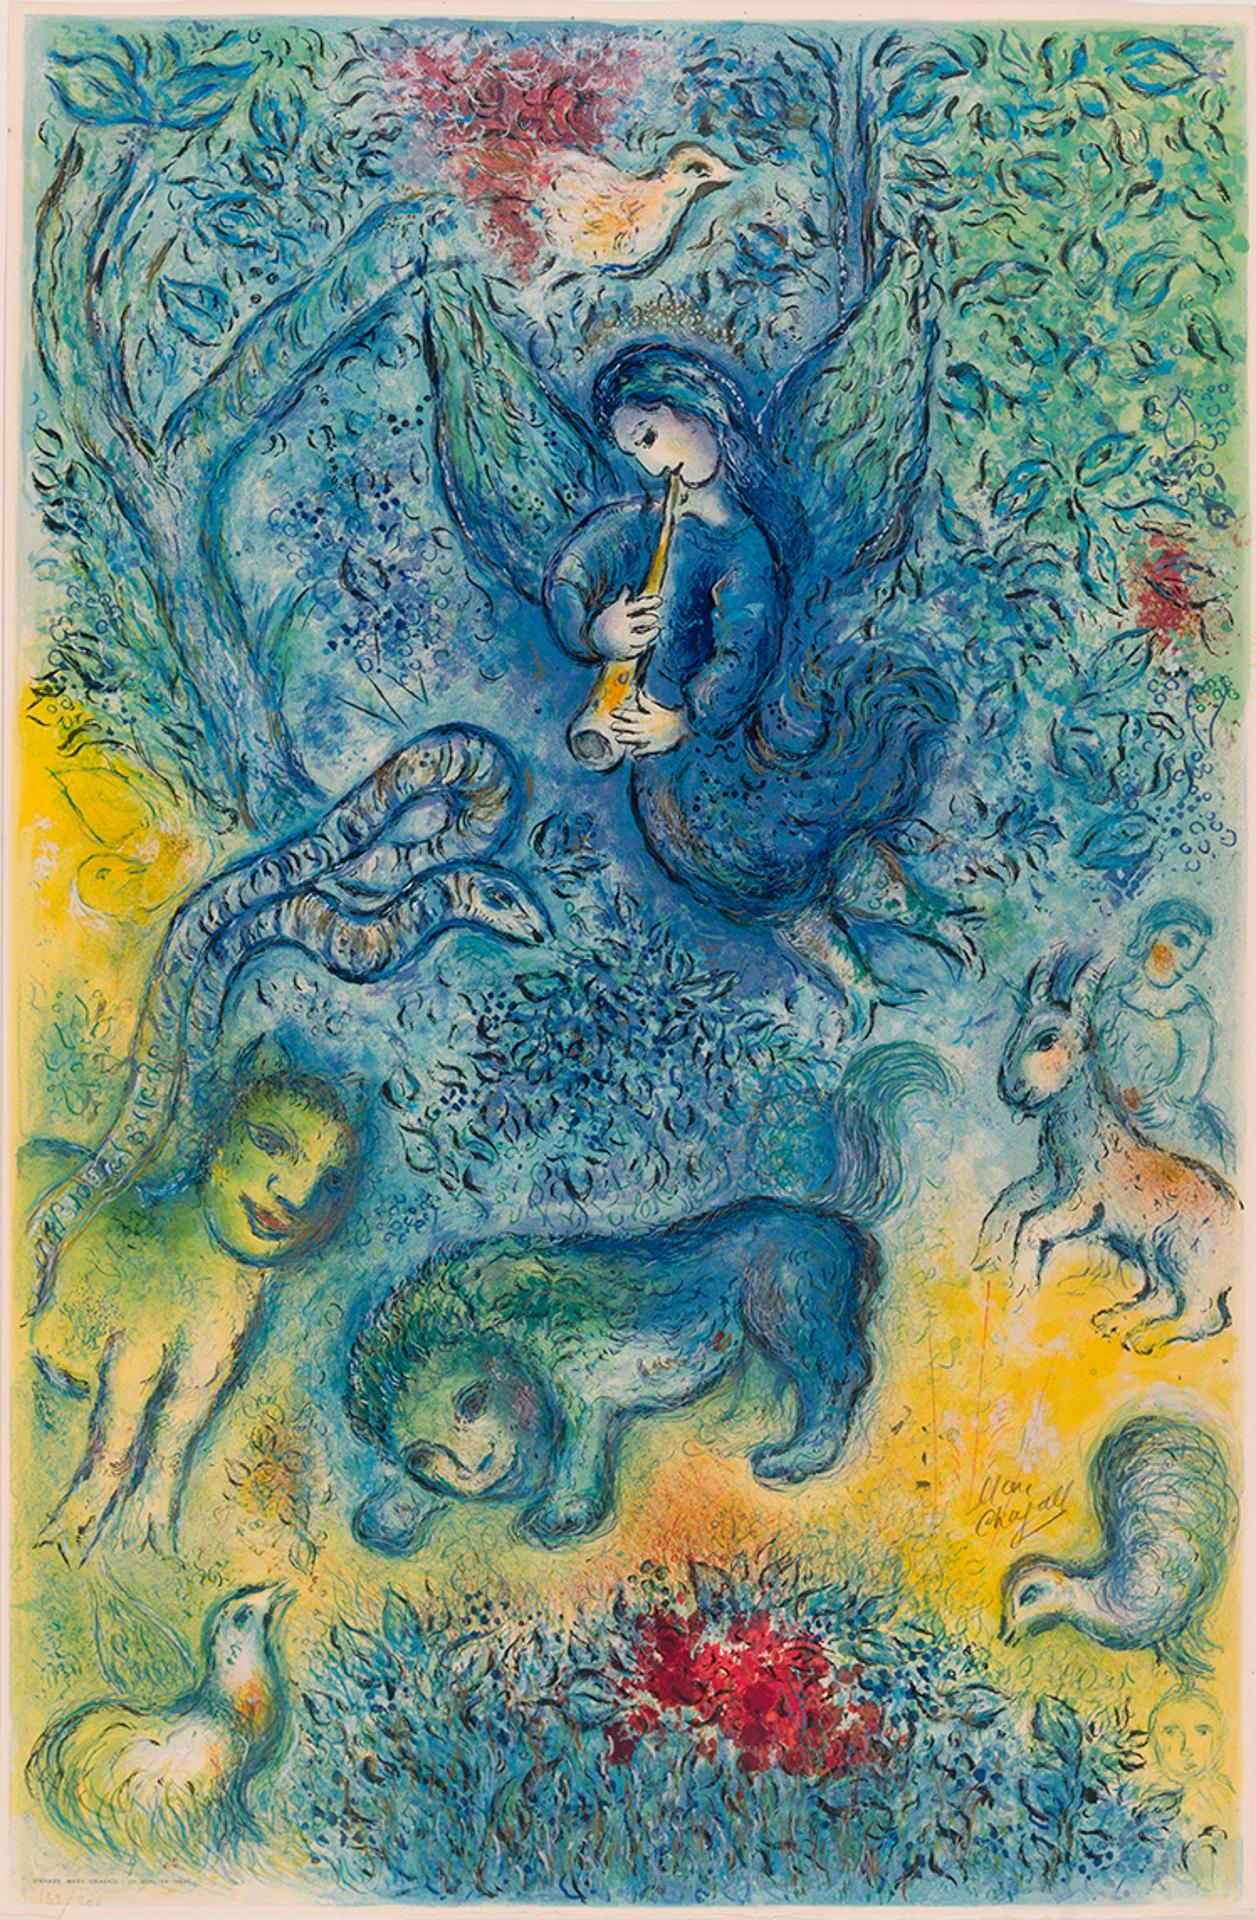 Marc Chagall (1887-1985) - The Magic Flute